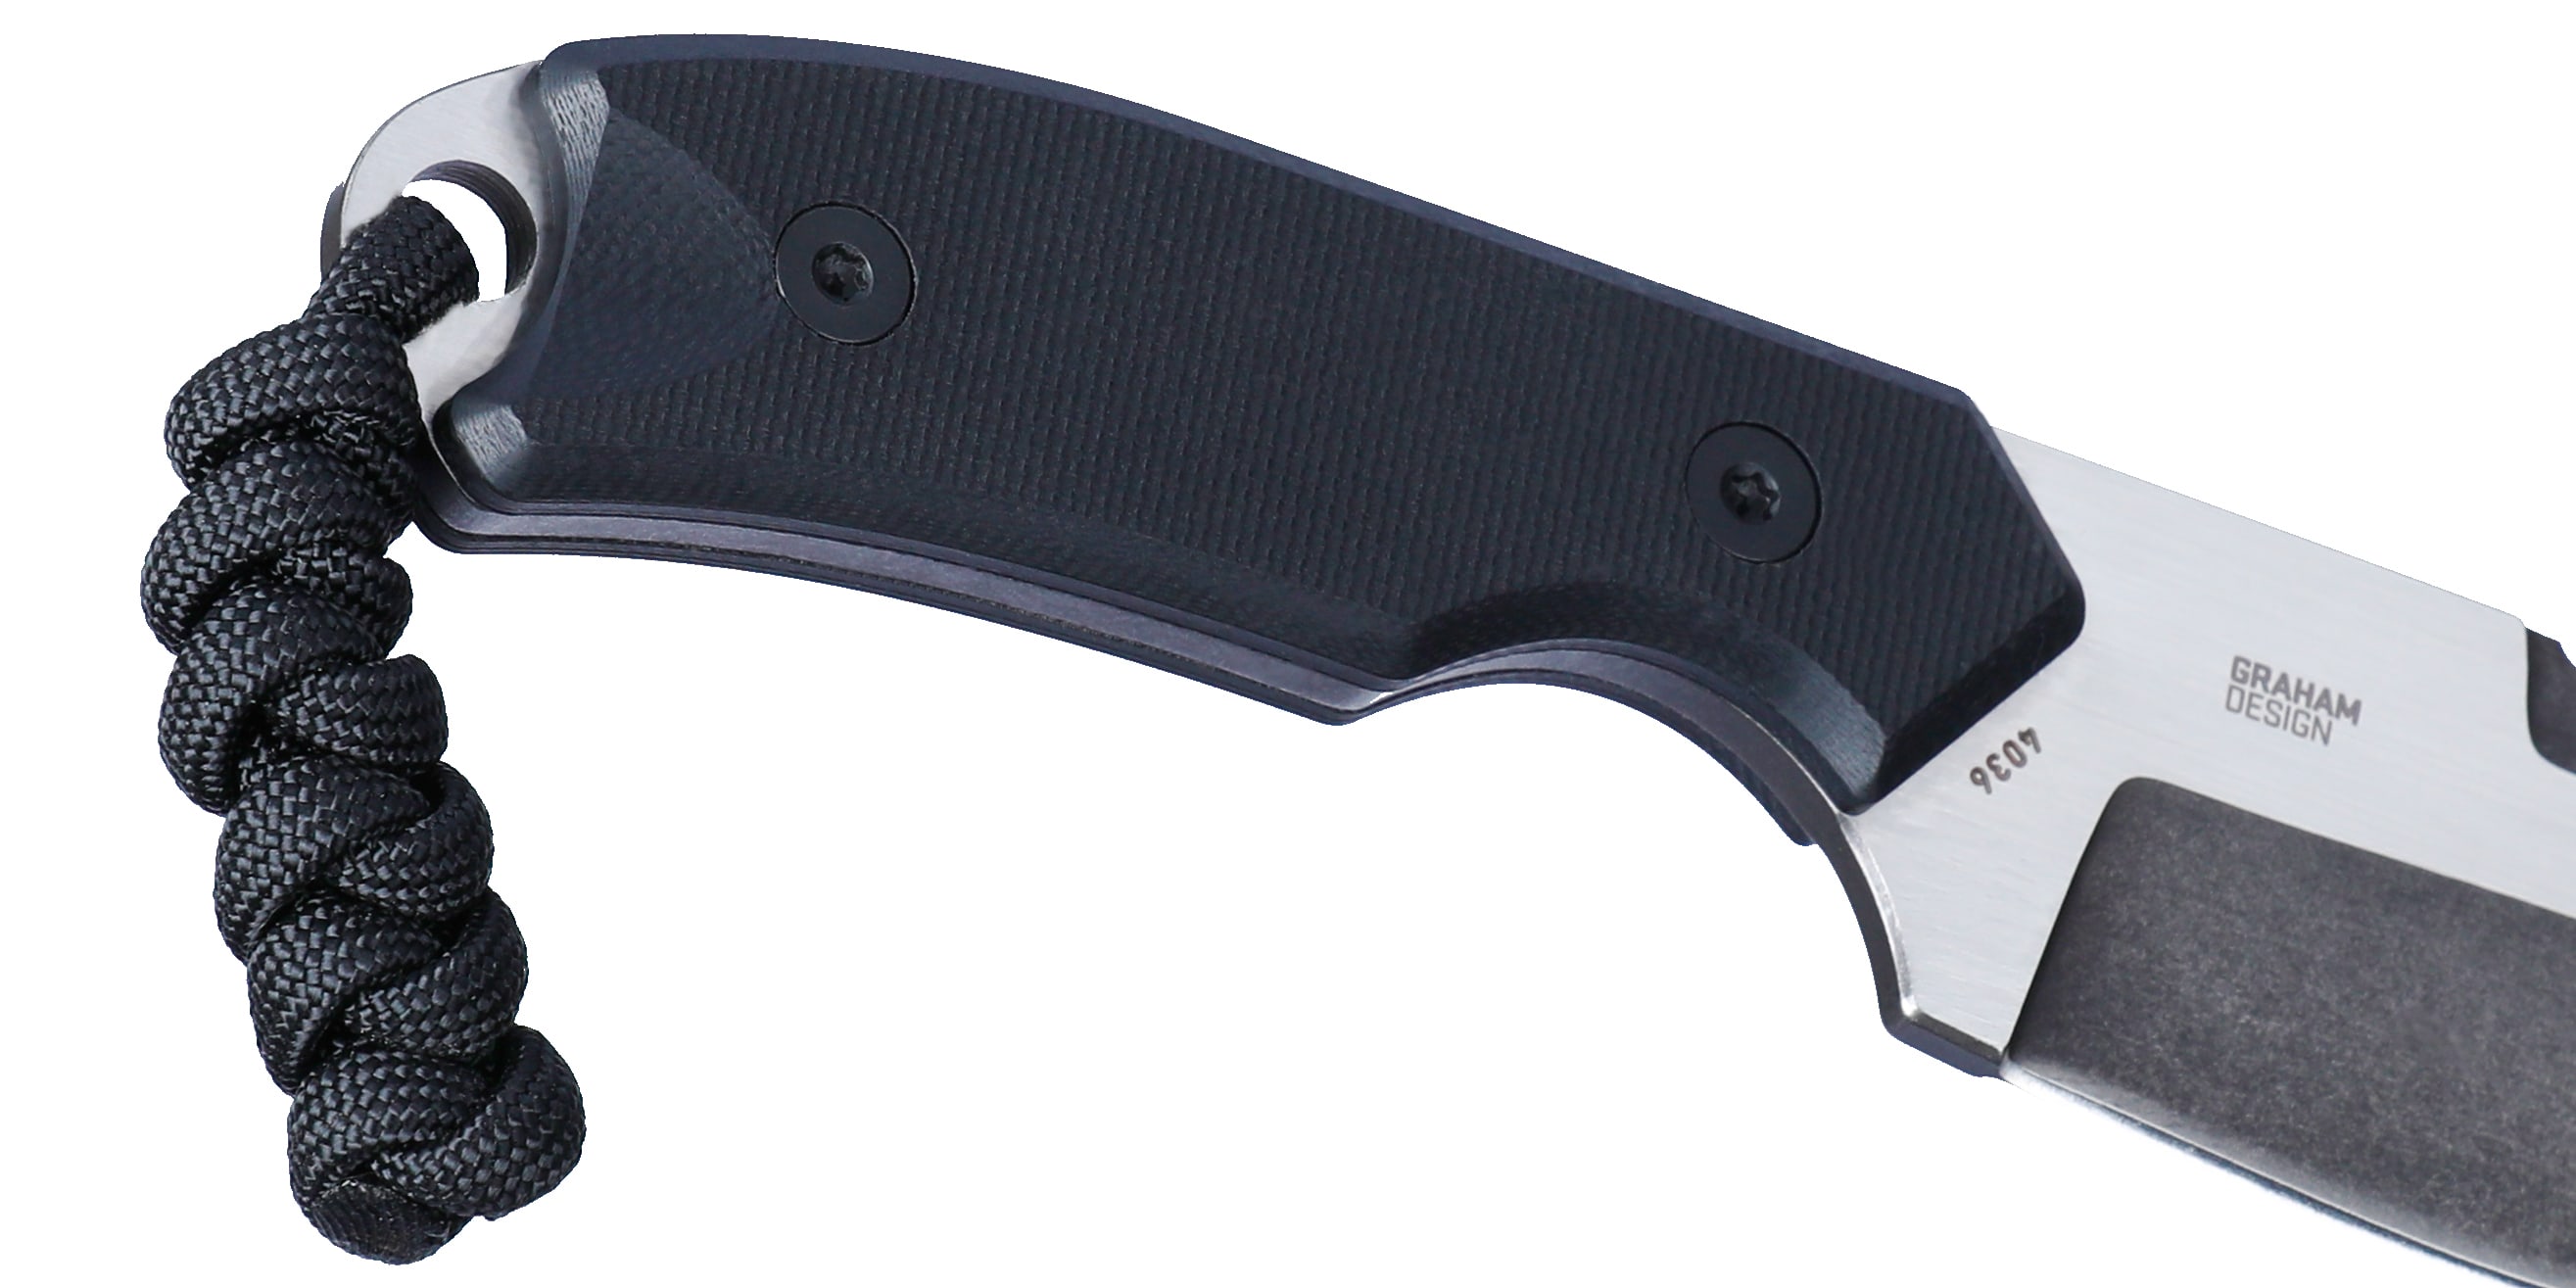 CRKT® Razel™ Compact Fixed Blade Knife